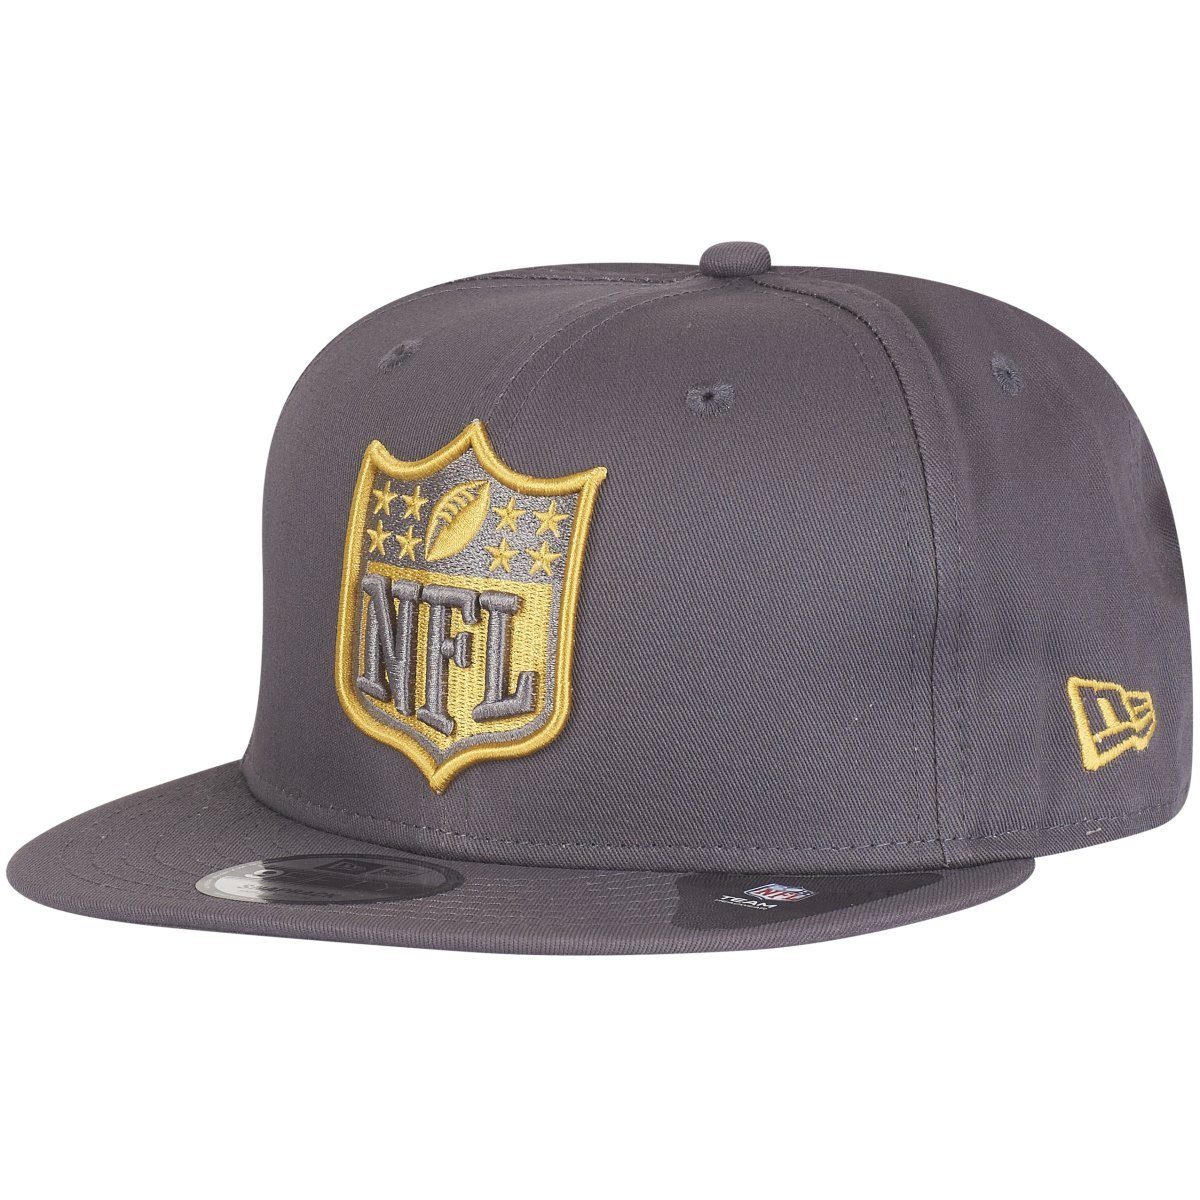 New Era Snapback Cap 9Fifty NFL Shield gold